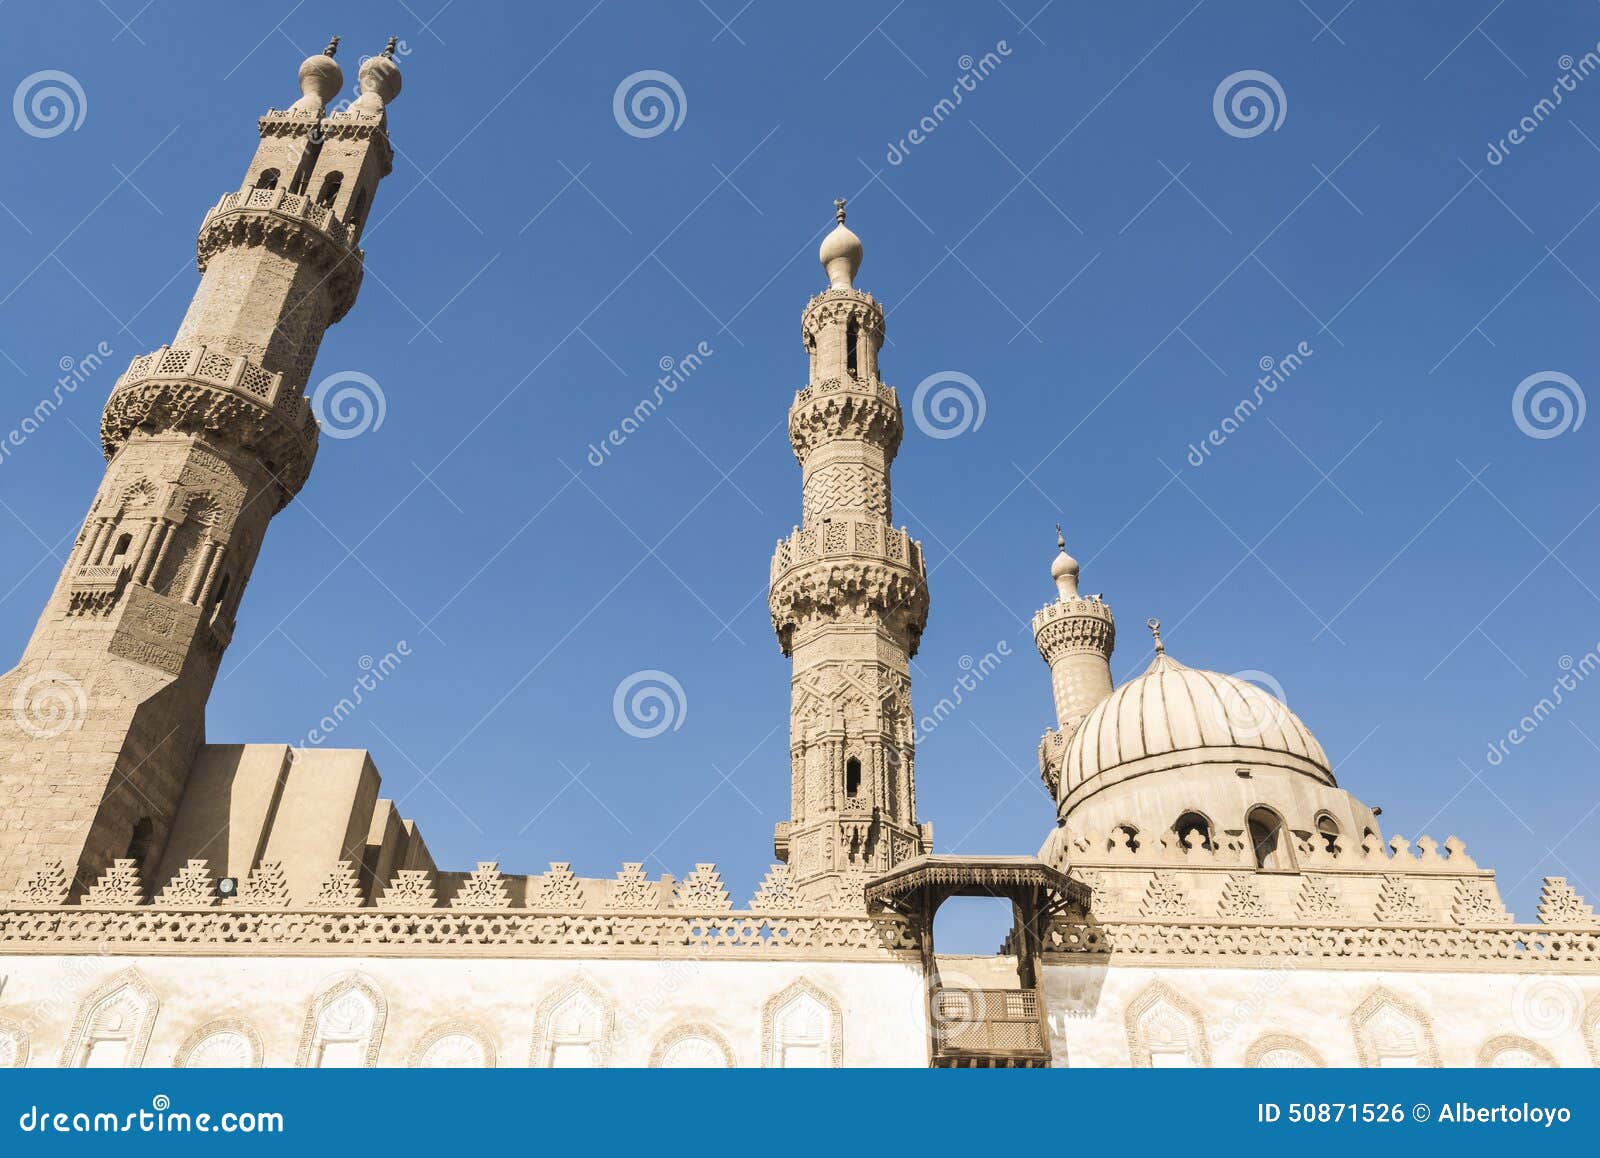 al-azhar mosque, cairo, egypt